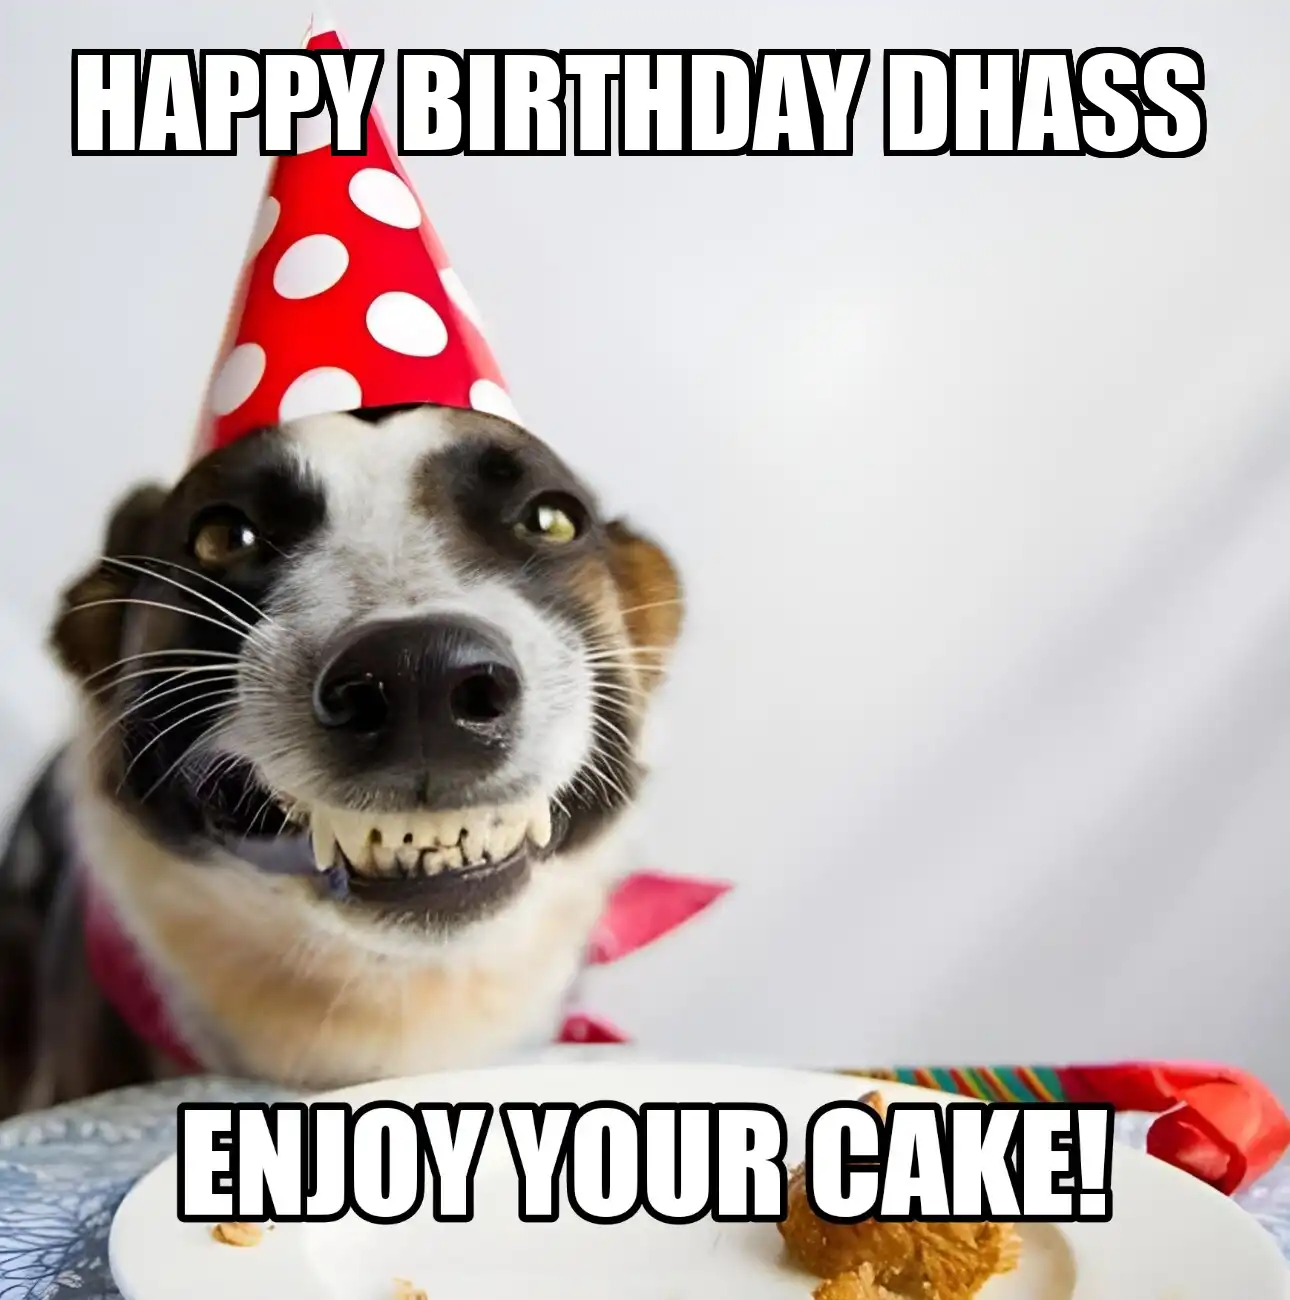 Happy Birthday Dhass Enjoy Your Cake Dog Meme